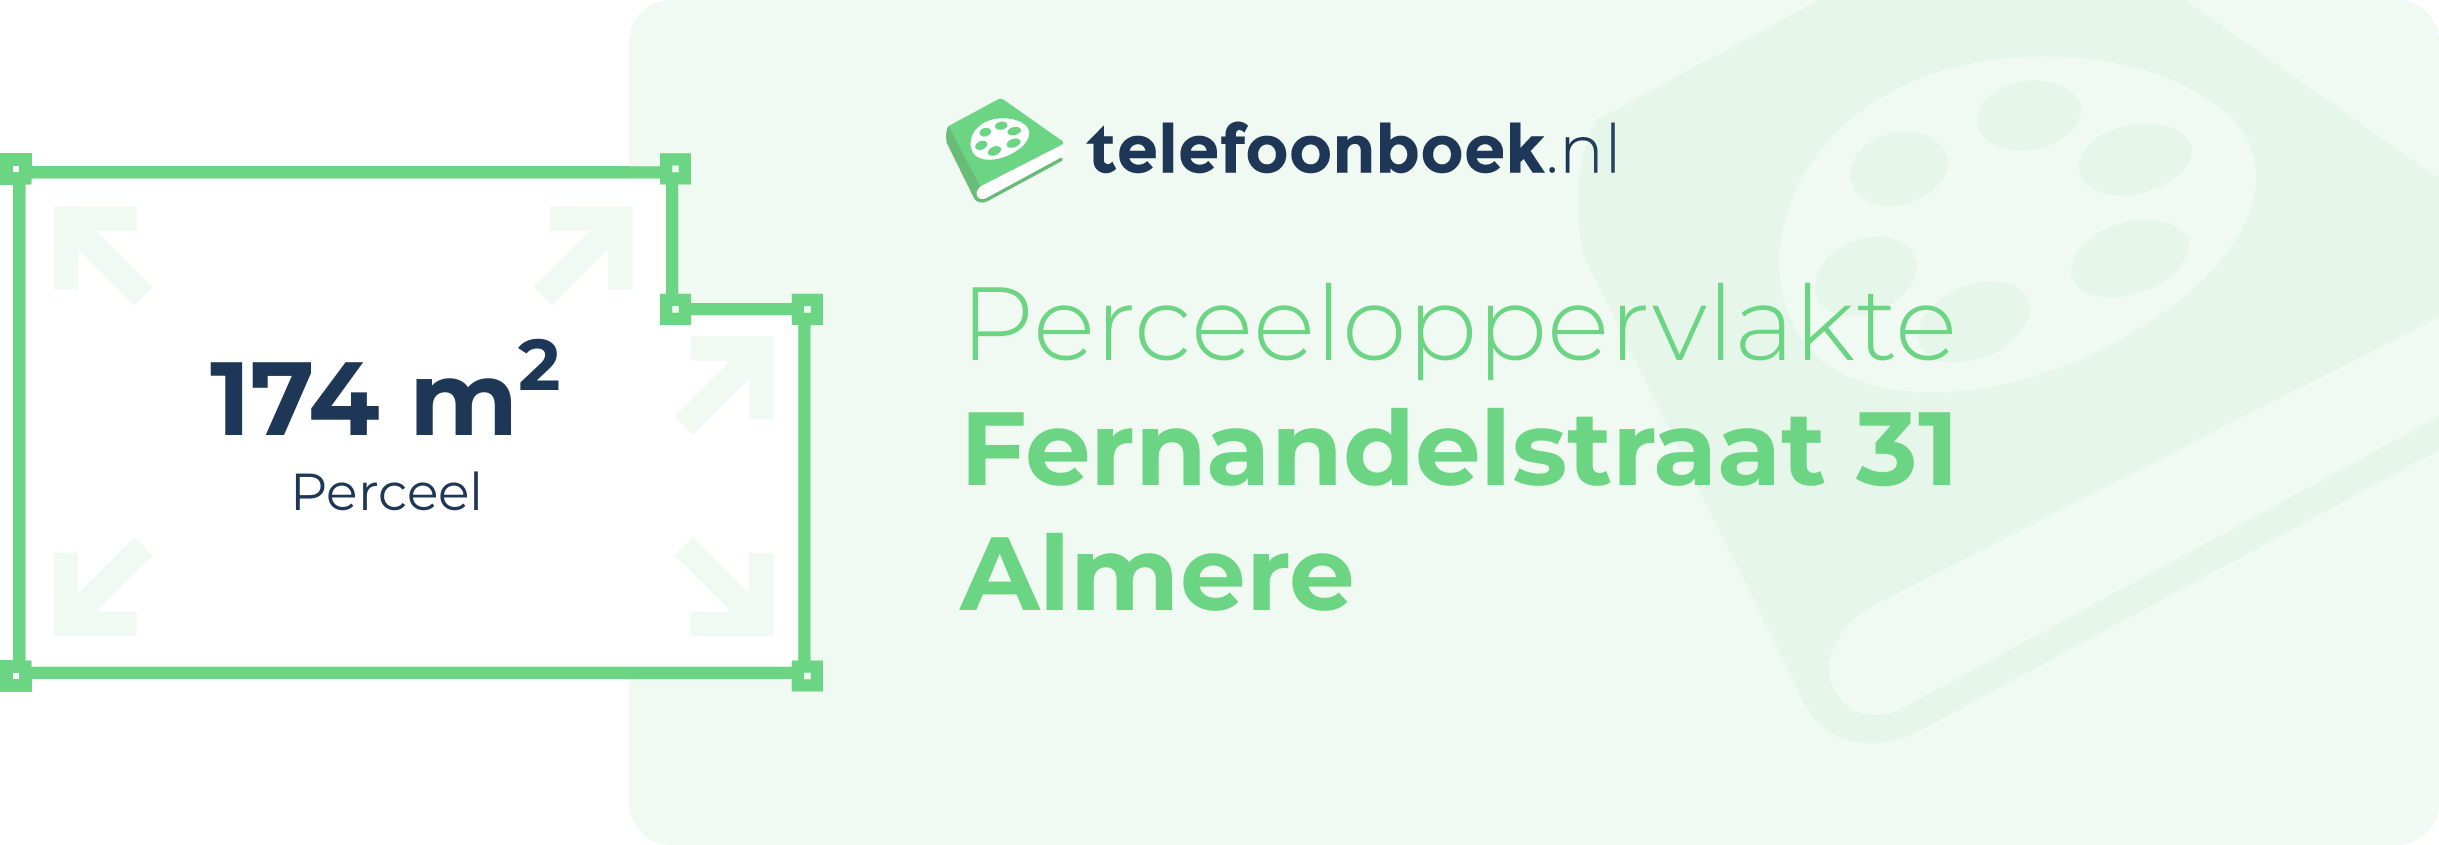 Perceeloppervlakte Fernandelstraat 31 Almere